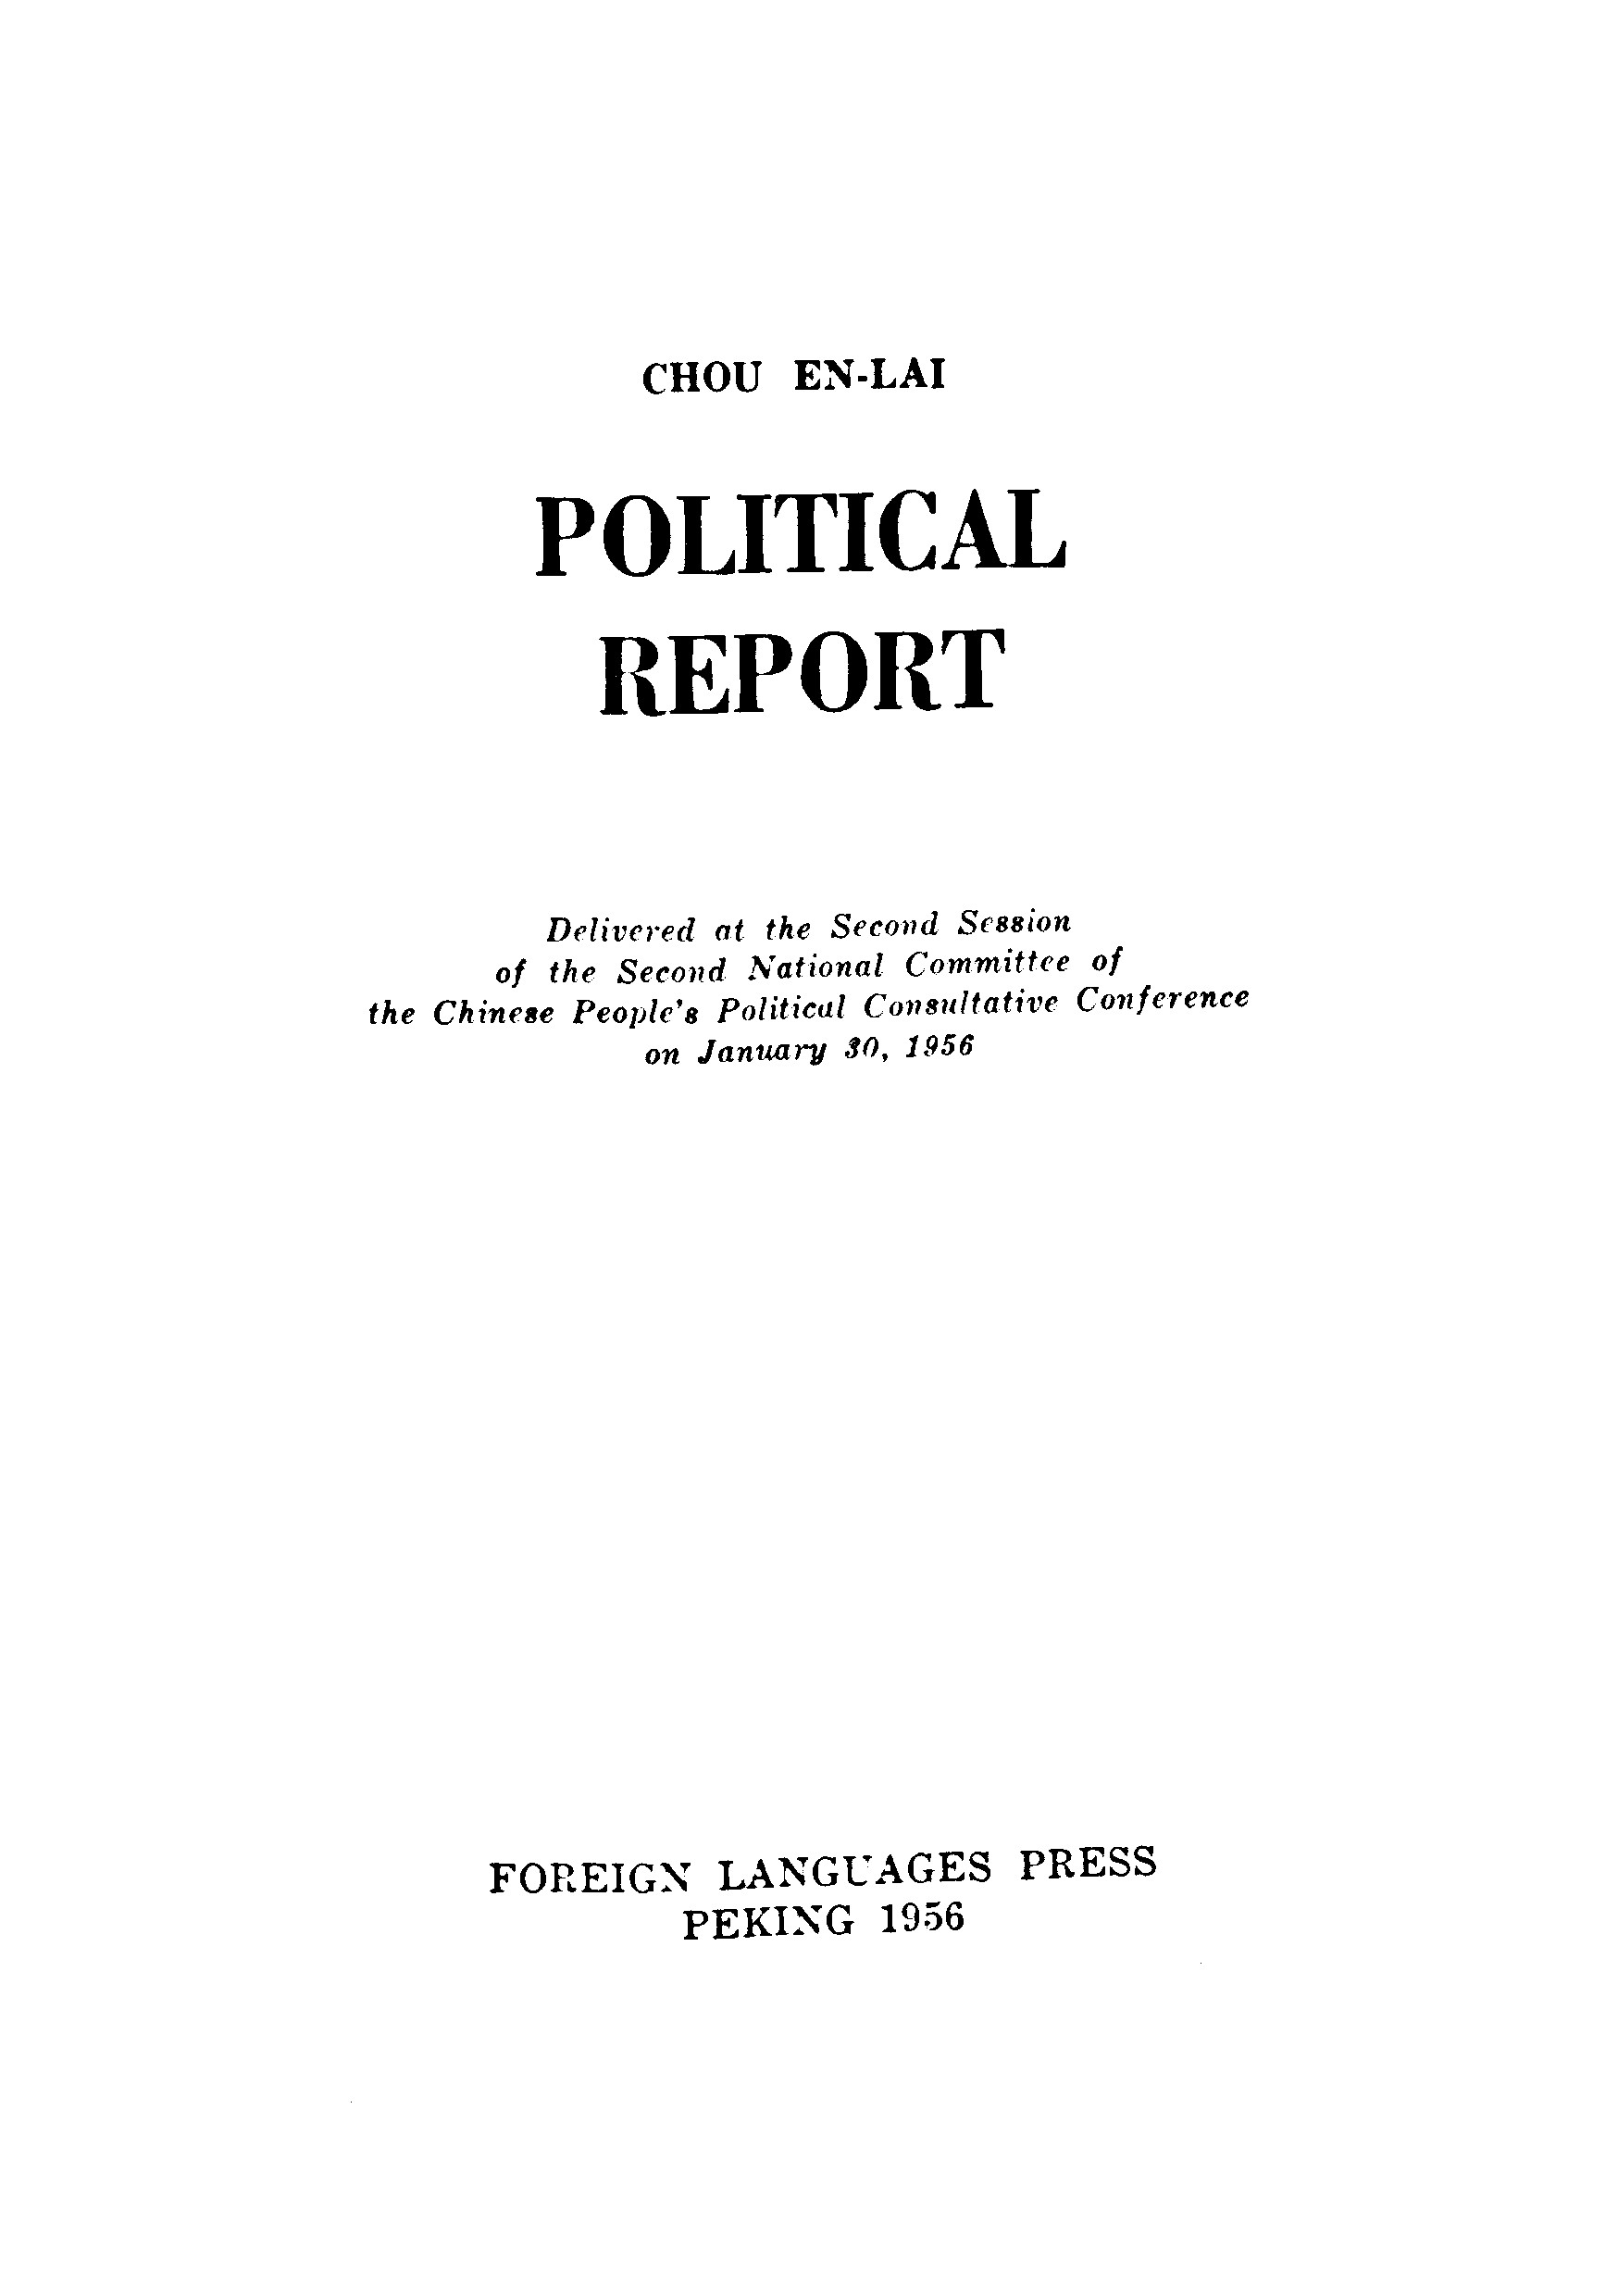 Political Report [ Chou En-Lai]